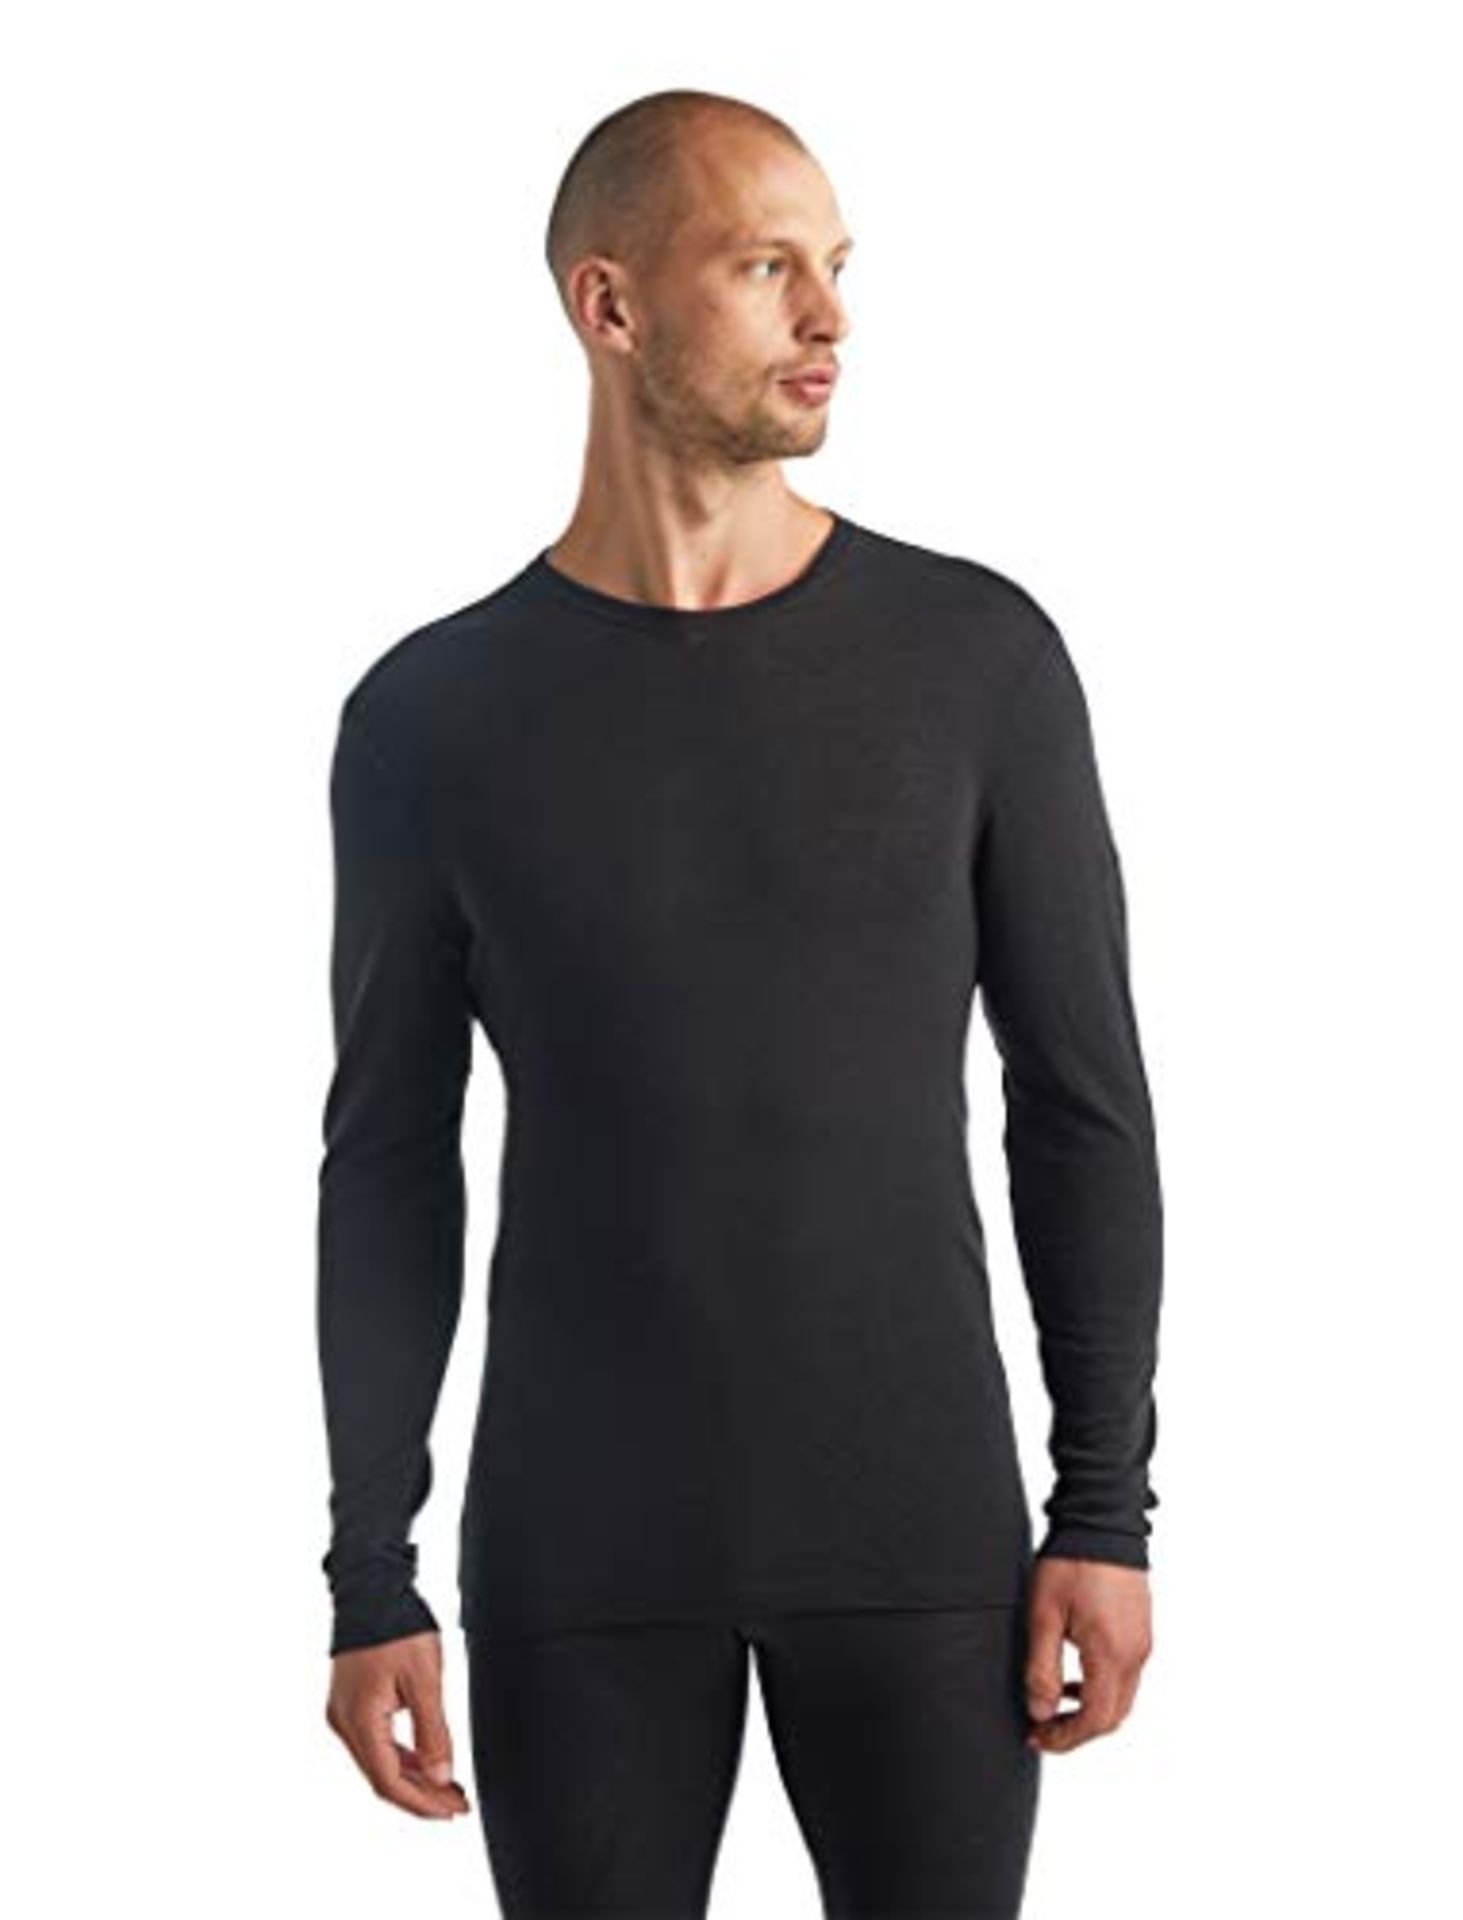 RRP £69.00 Icebreaker Men's Everyday Long Sleeve Crewe Thermal Top T shirt, Black, M UK